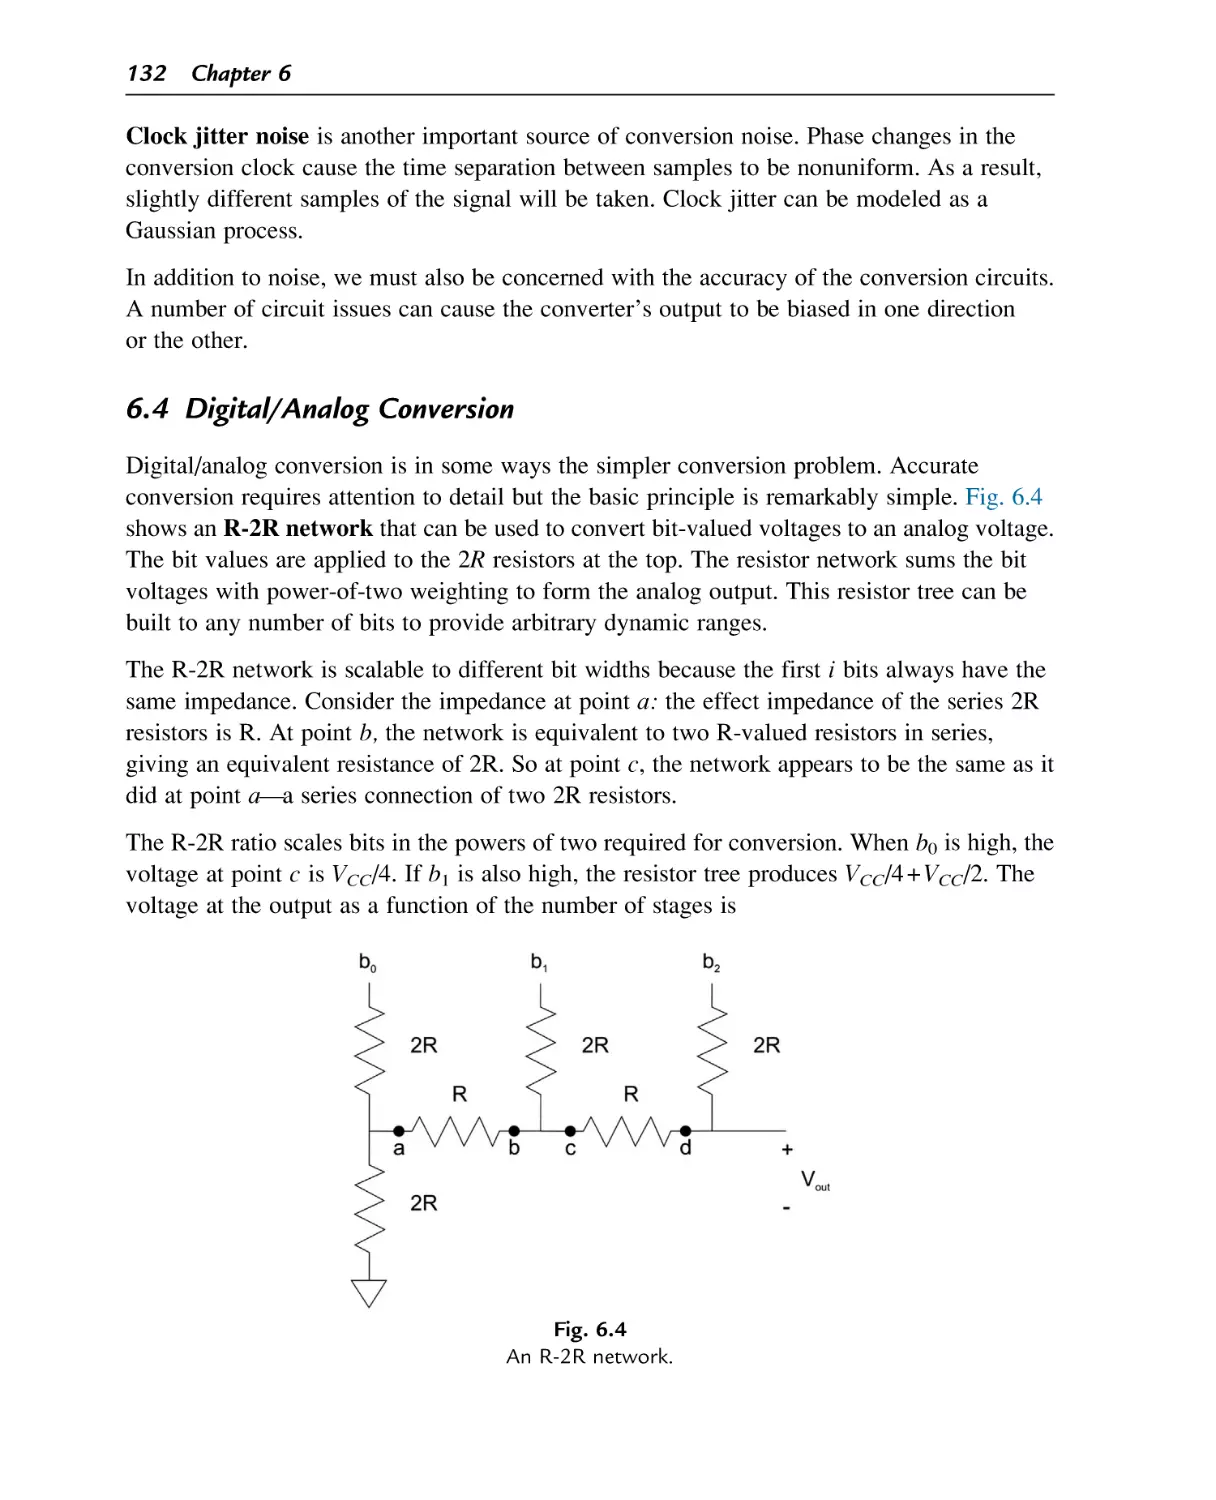 Digital/Analog Conversion